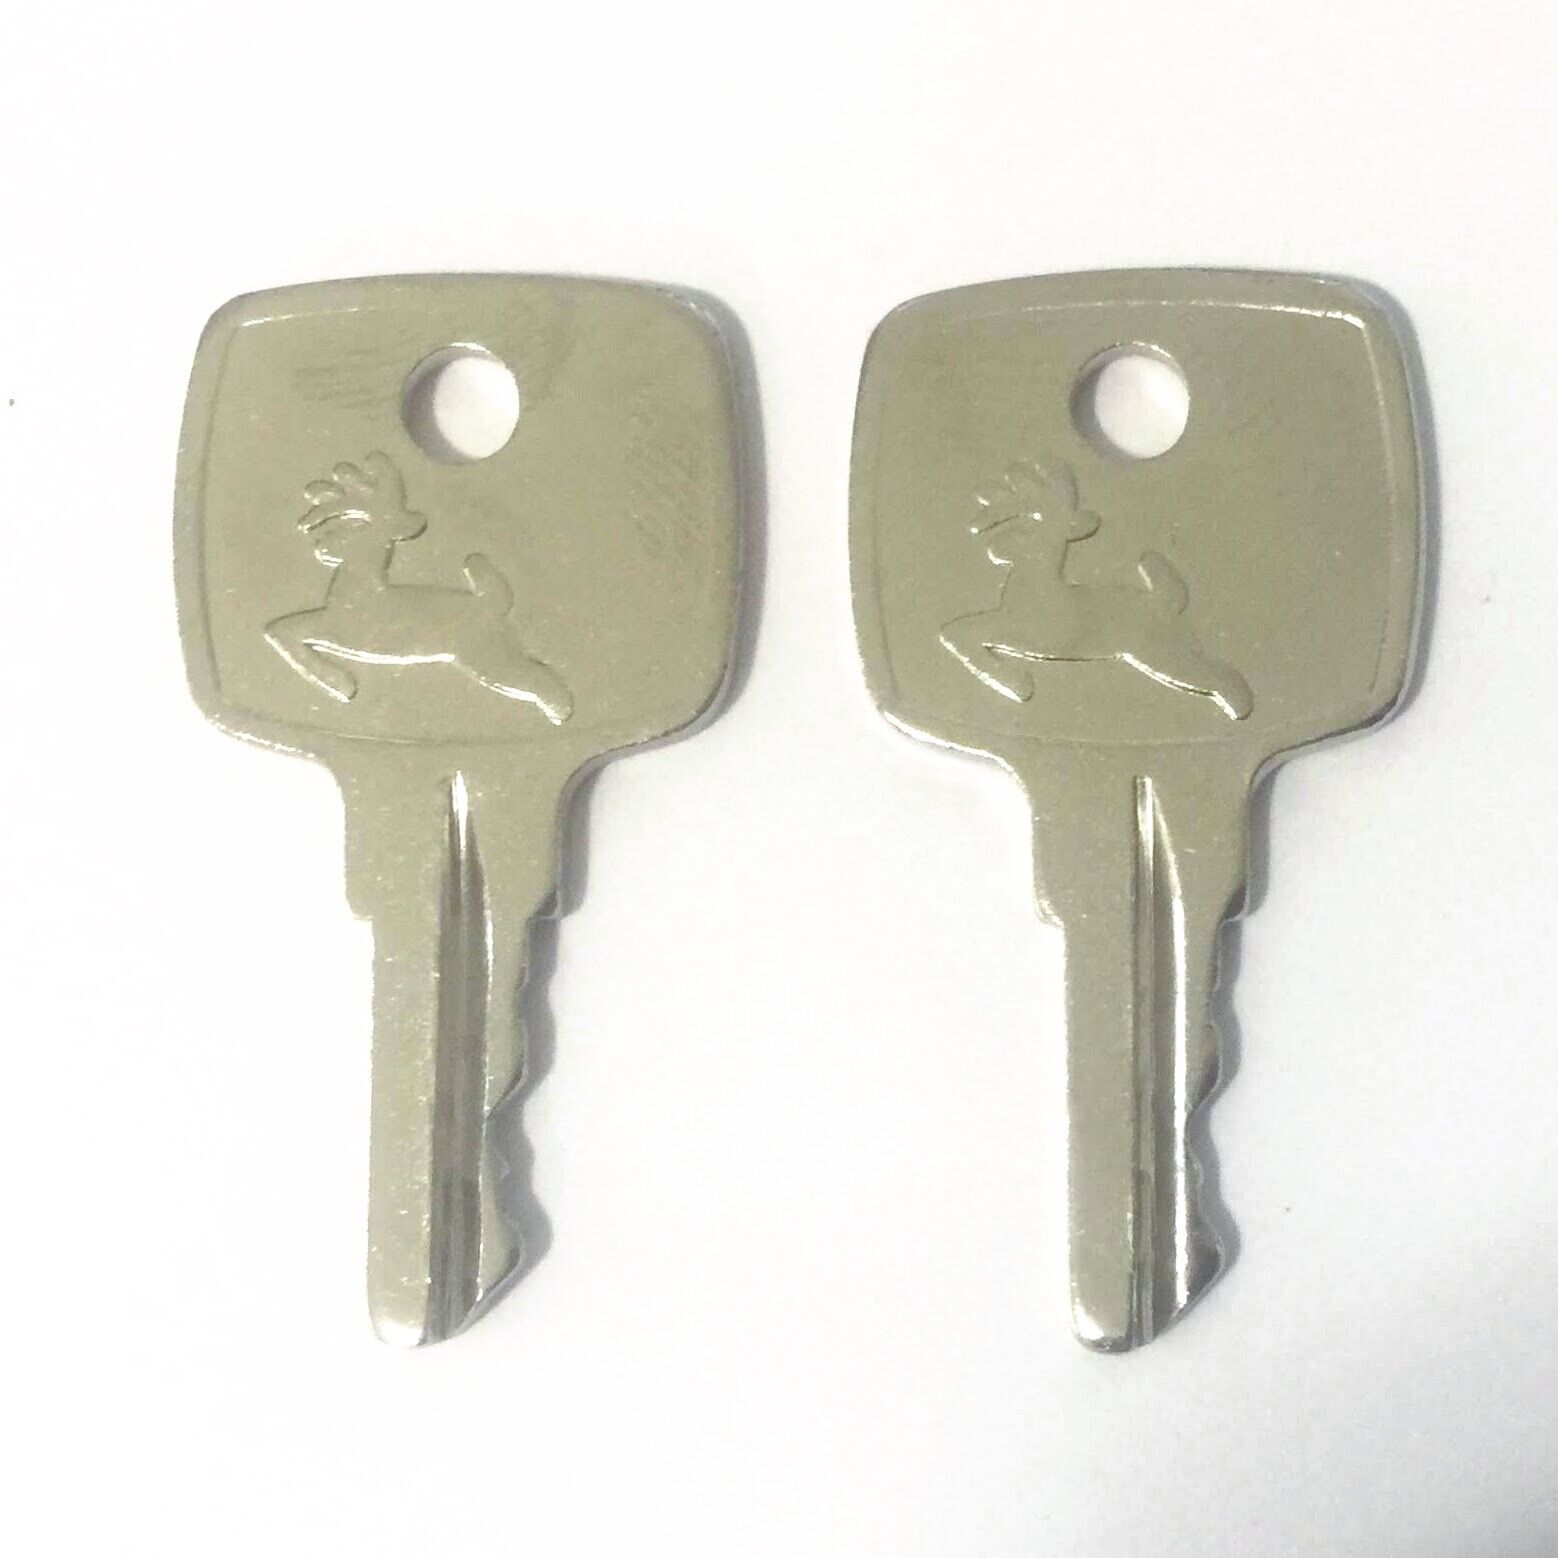 2 John Deere AR51481 Ignition Keys - Fast Free Shipping! JOHN DEERE AR51481 - фотография #4